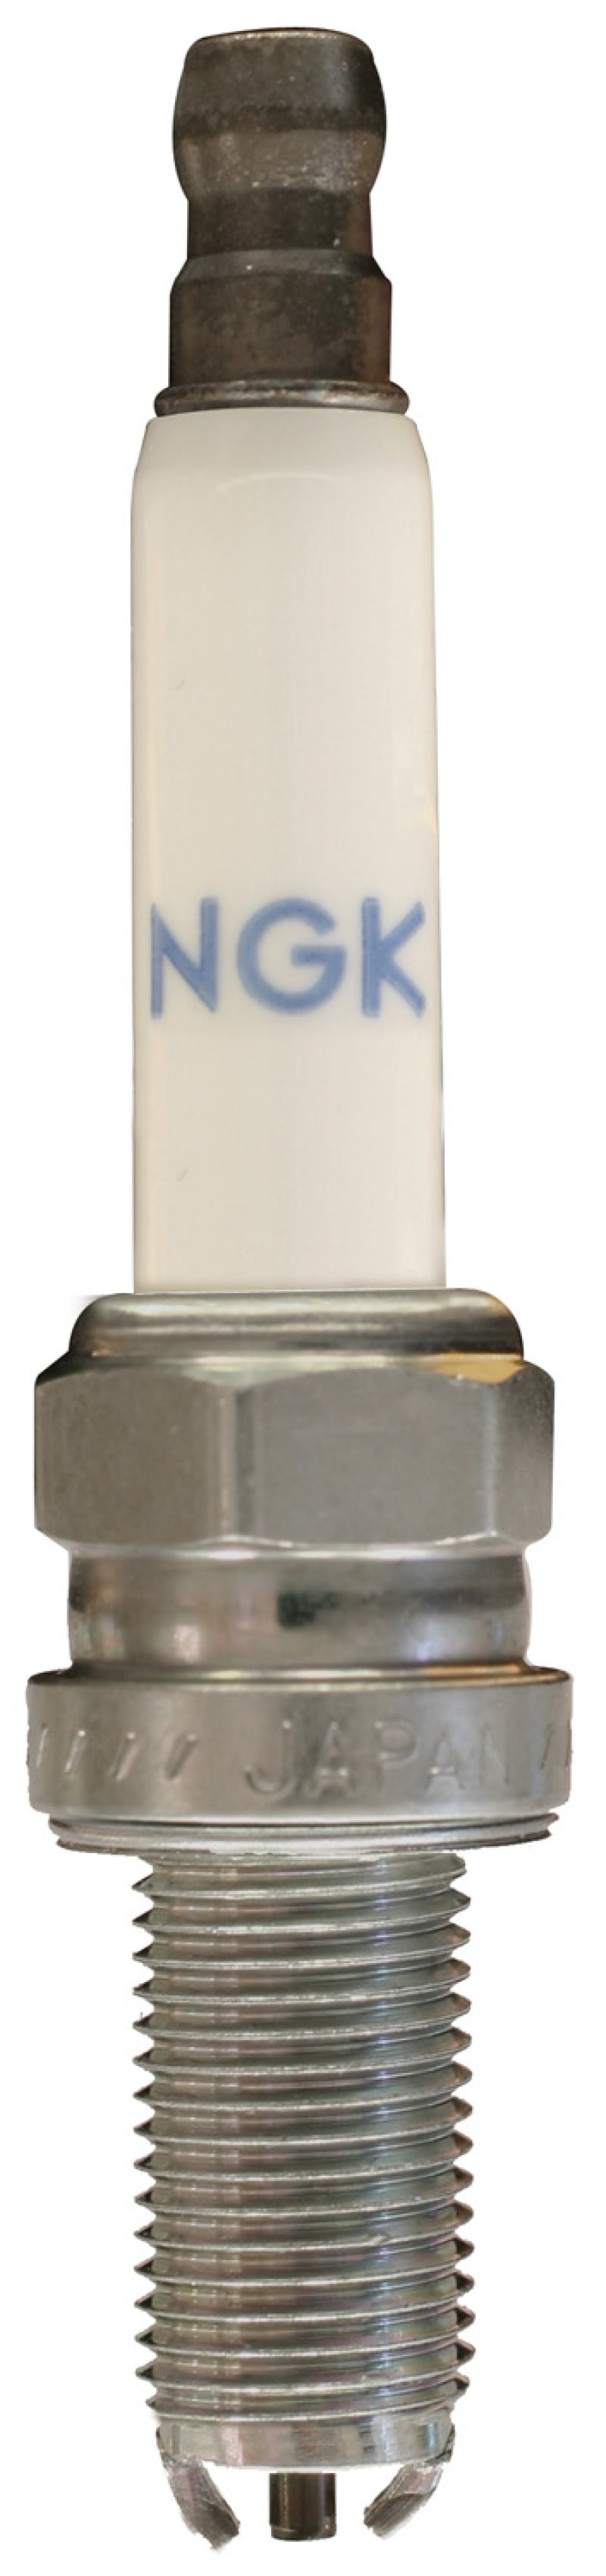 NGK Nickel Spark Plug Box of 10 (MAR9A-J) -  Shop now at Performance Car Parts